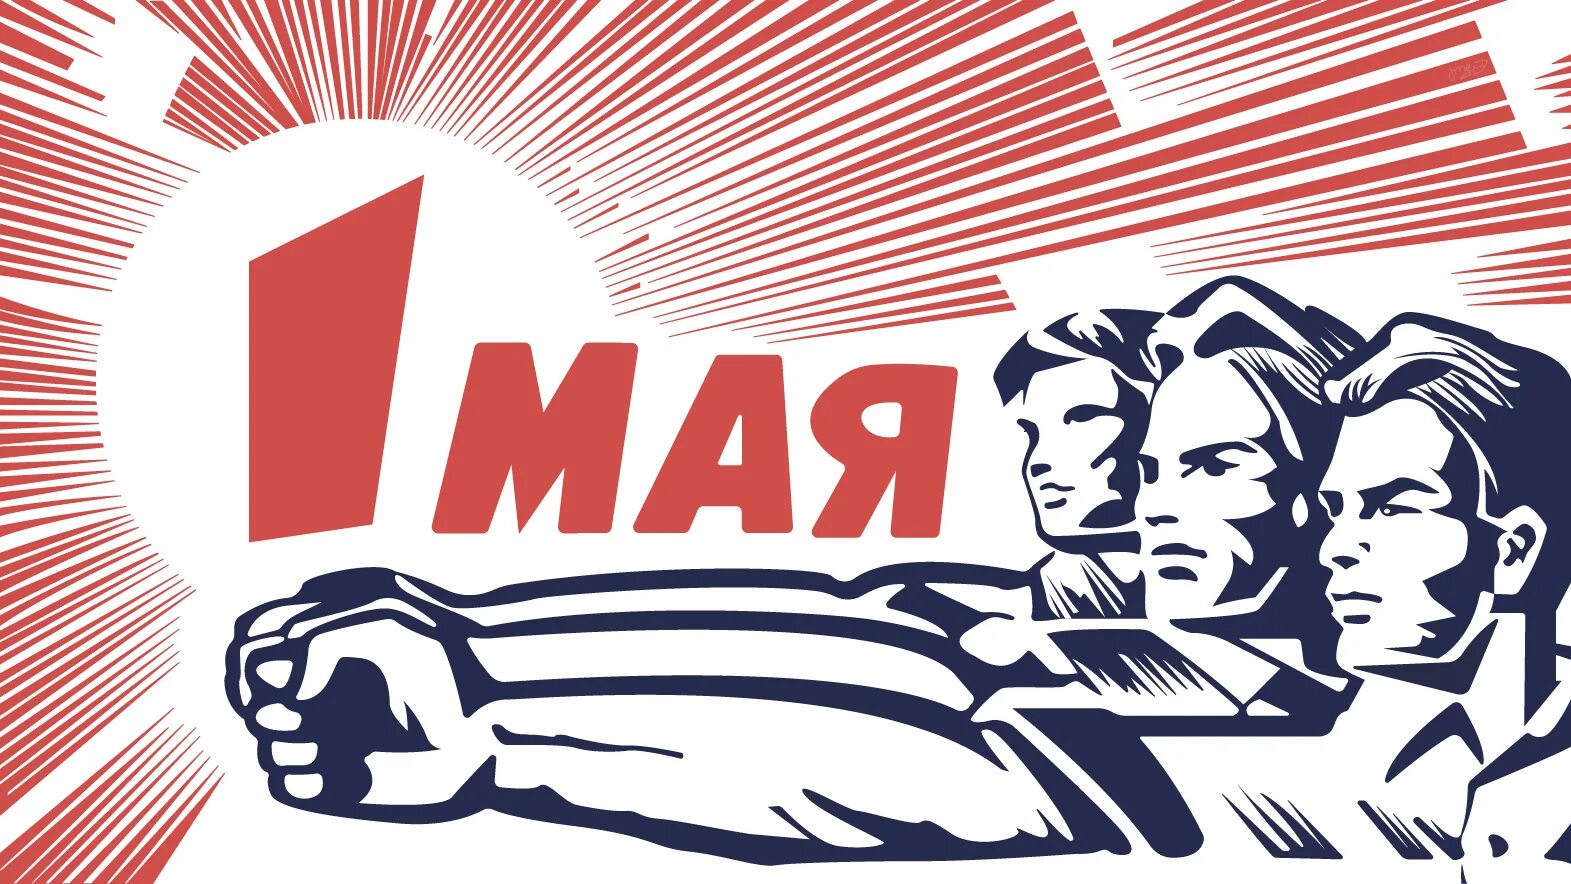 1 Мая плакат. 1 Мая советские плакаты. 1 Мая иллюстрация. Мир труд май.